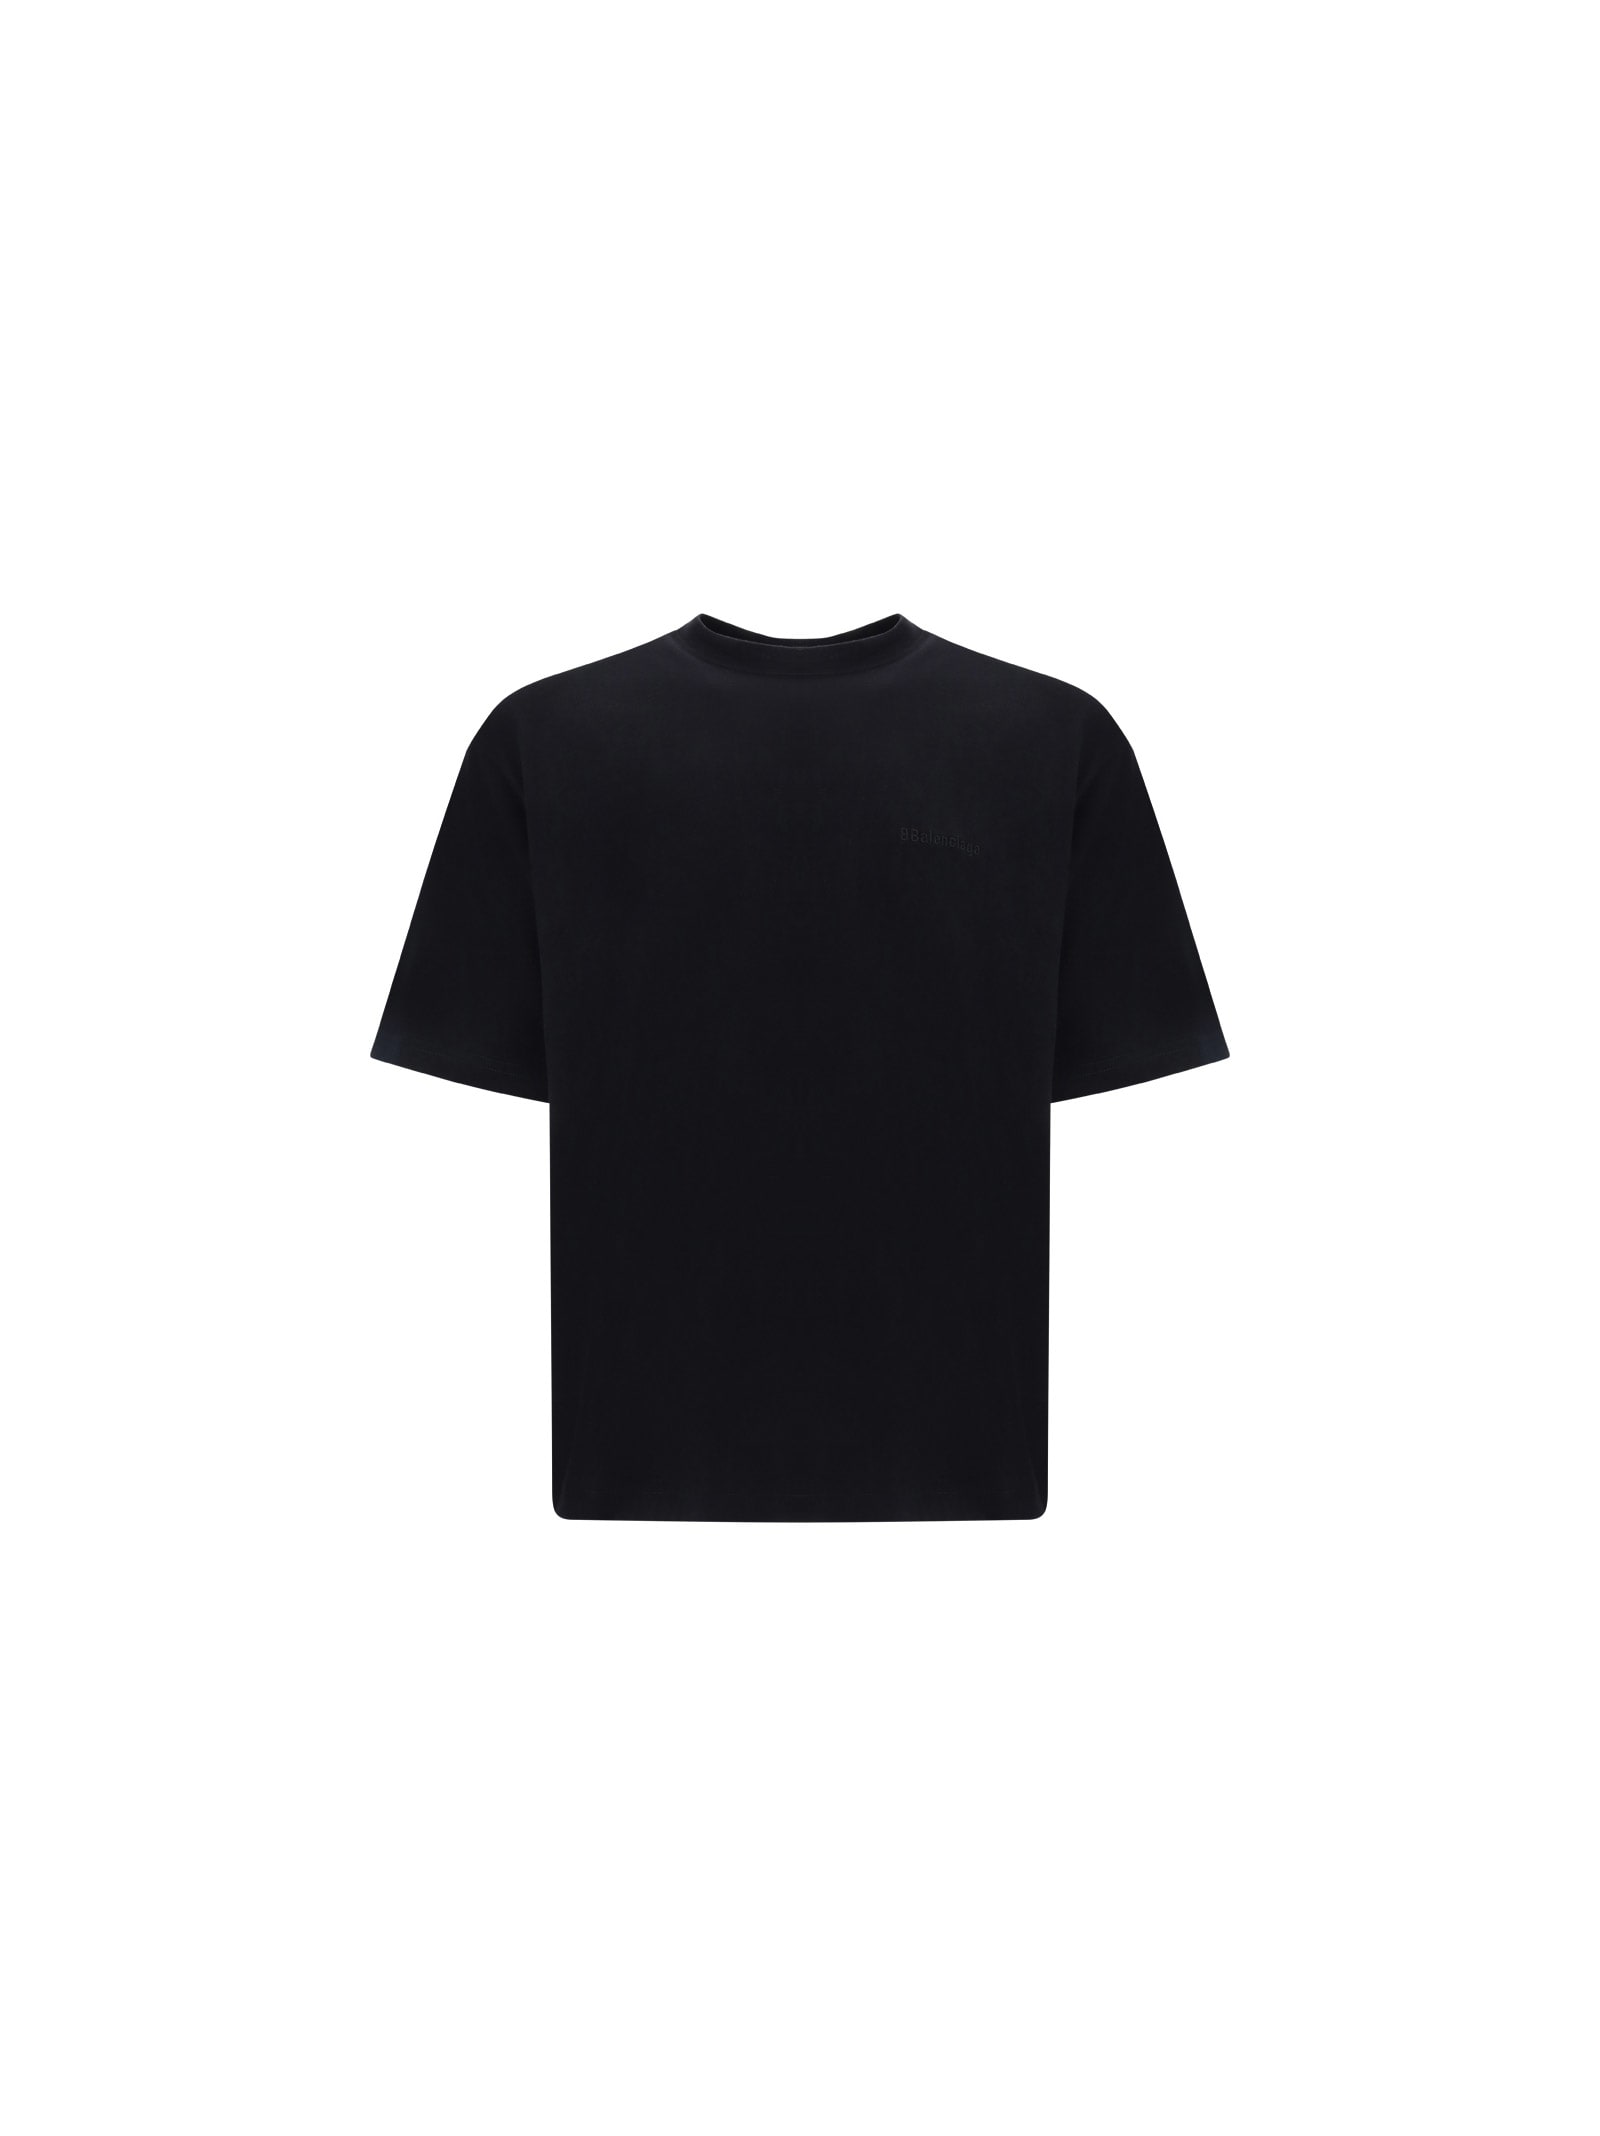 Balenciaga T-shirt In Washed Black/black